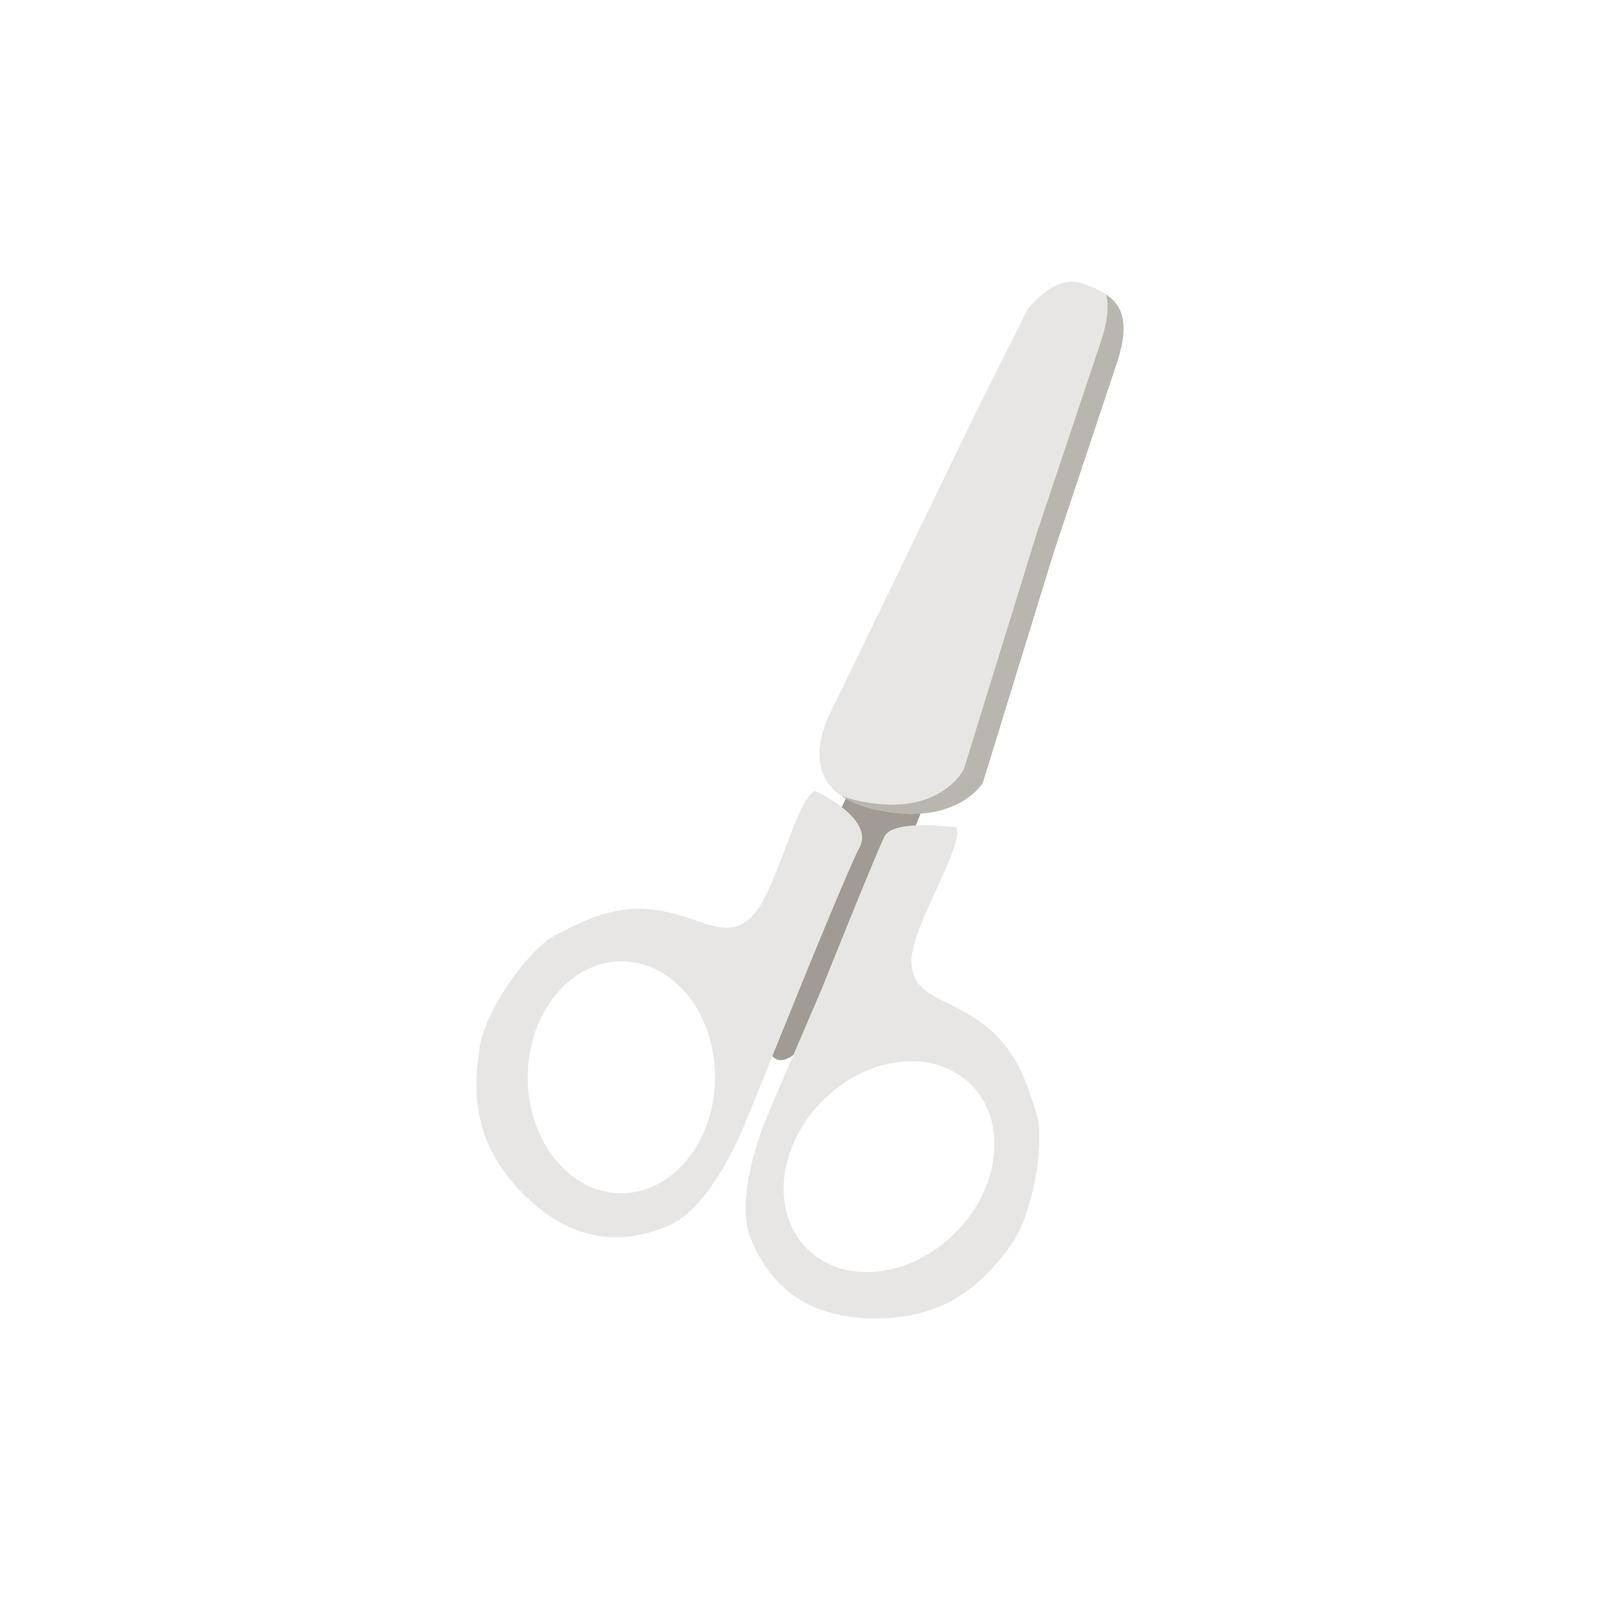 Scissors icon in flat style by LyannaDesign